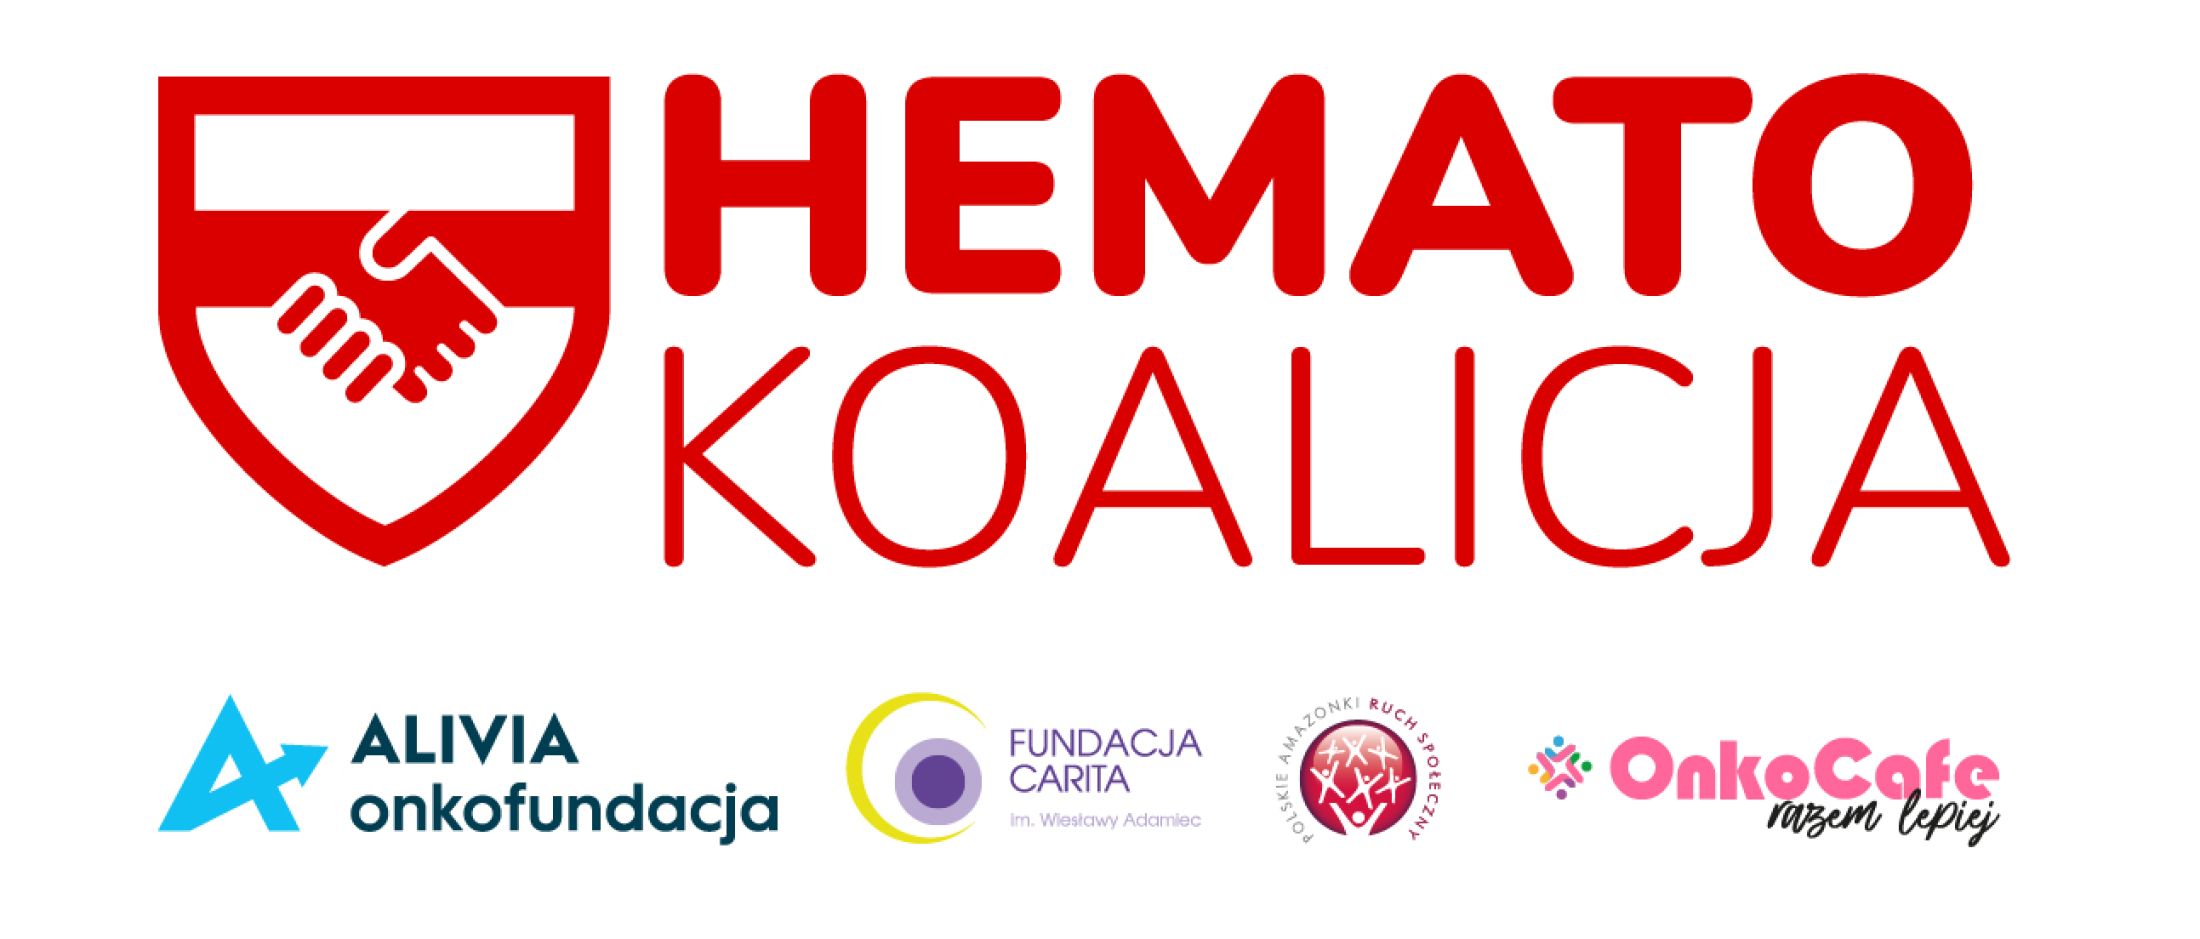 Logo Hematokoalicja_nowe